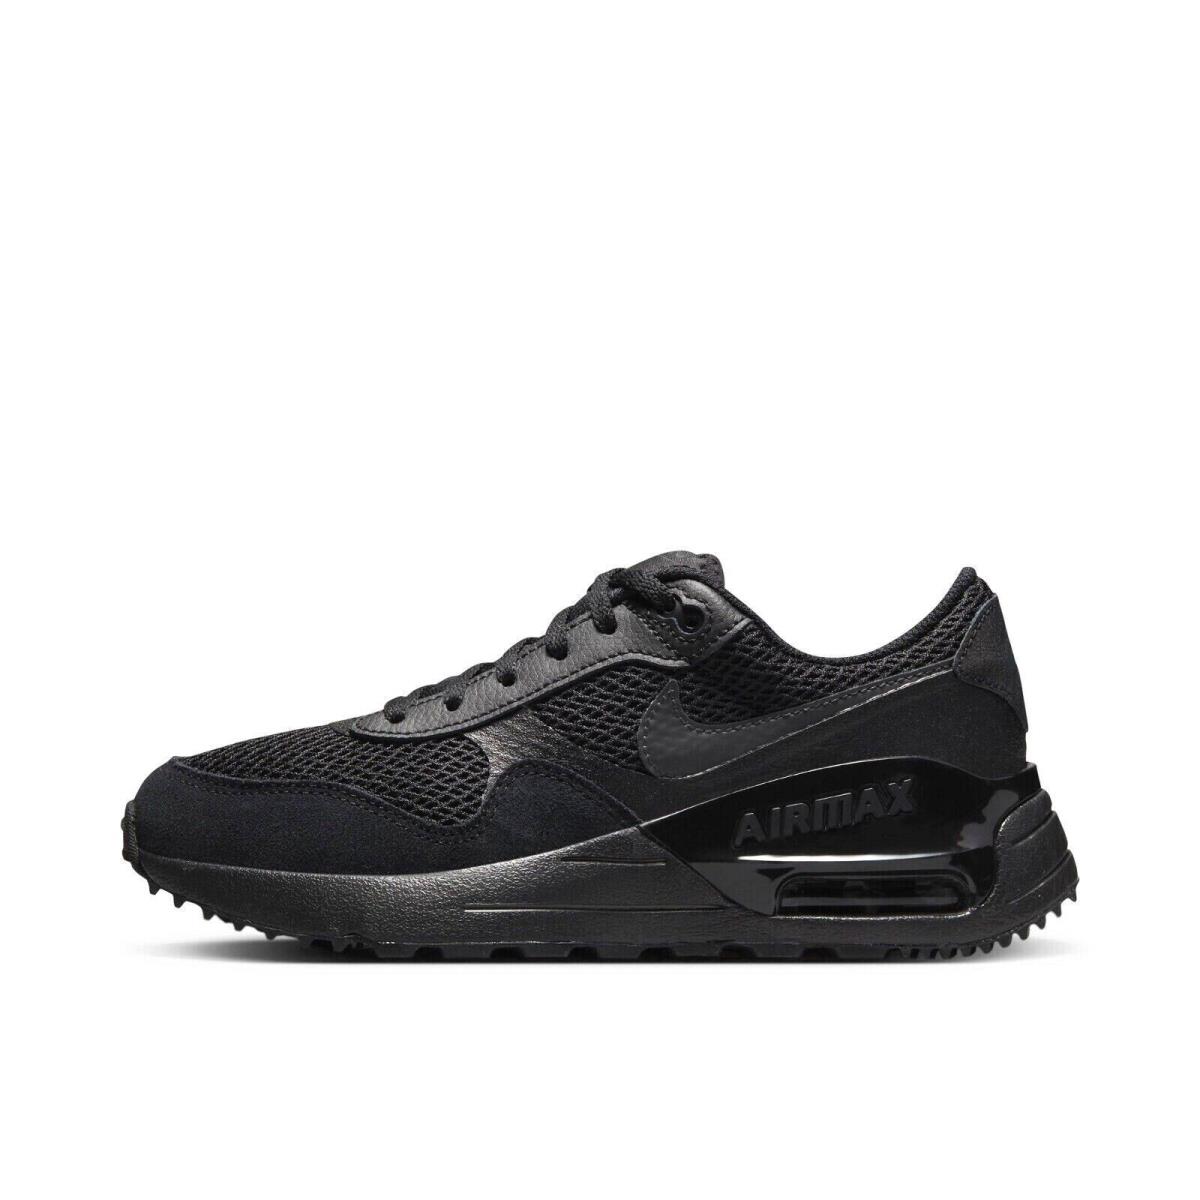 Big Kid`s Nike Air Max Systm Black/anthracite-black DQ0284 004 - Black